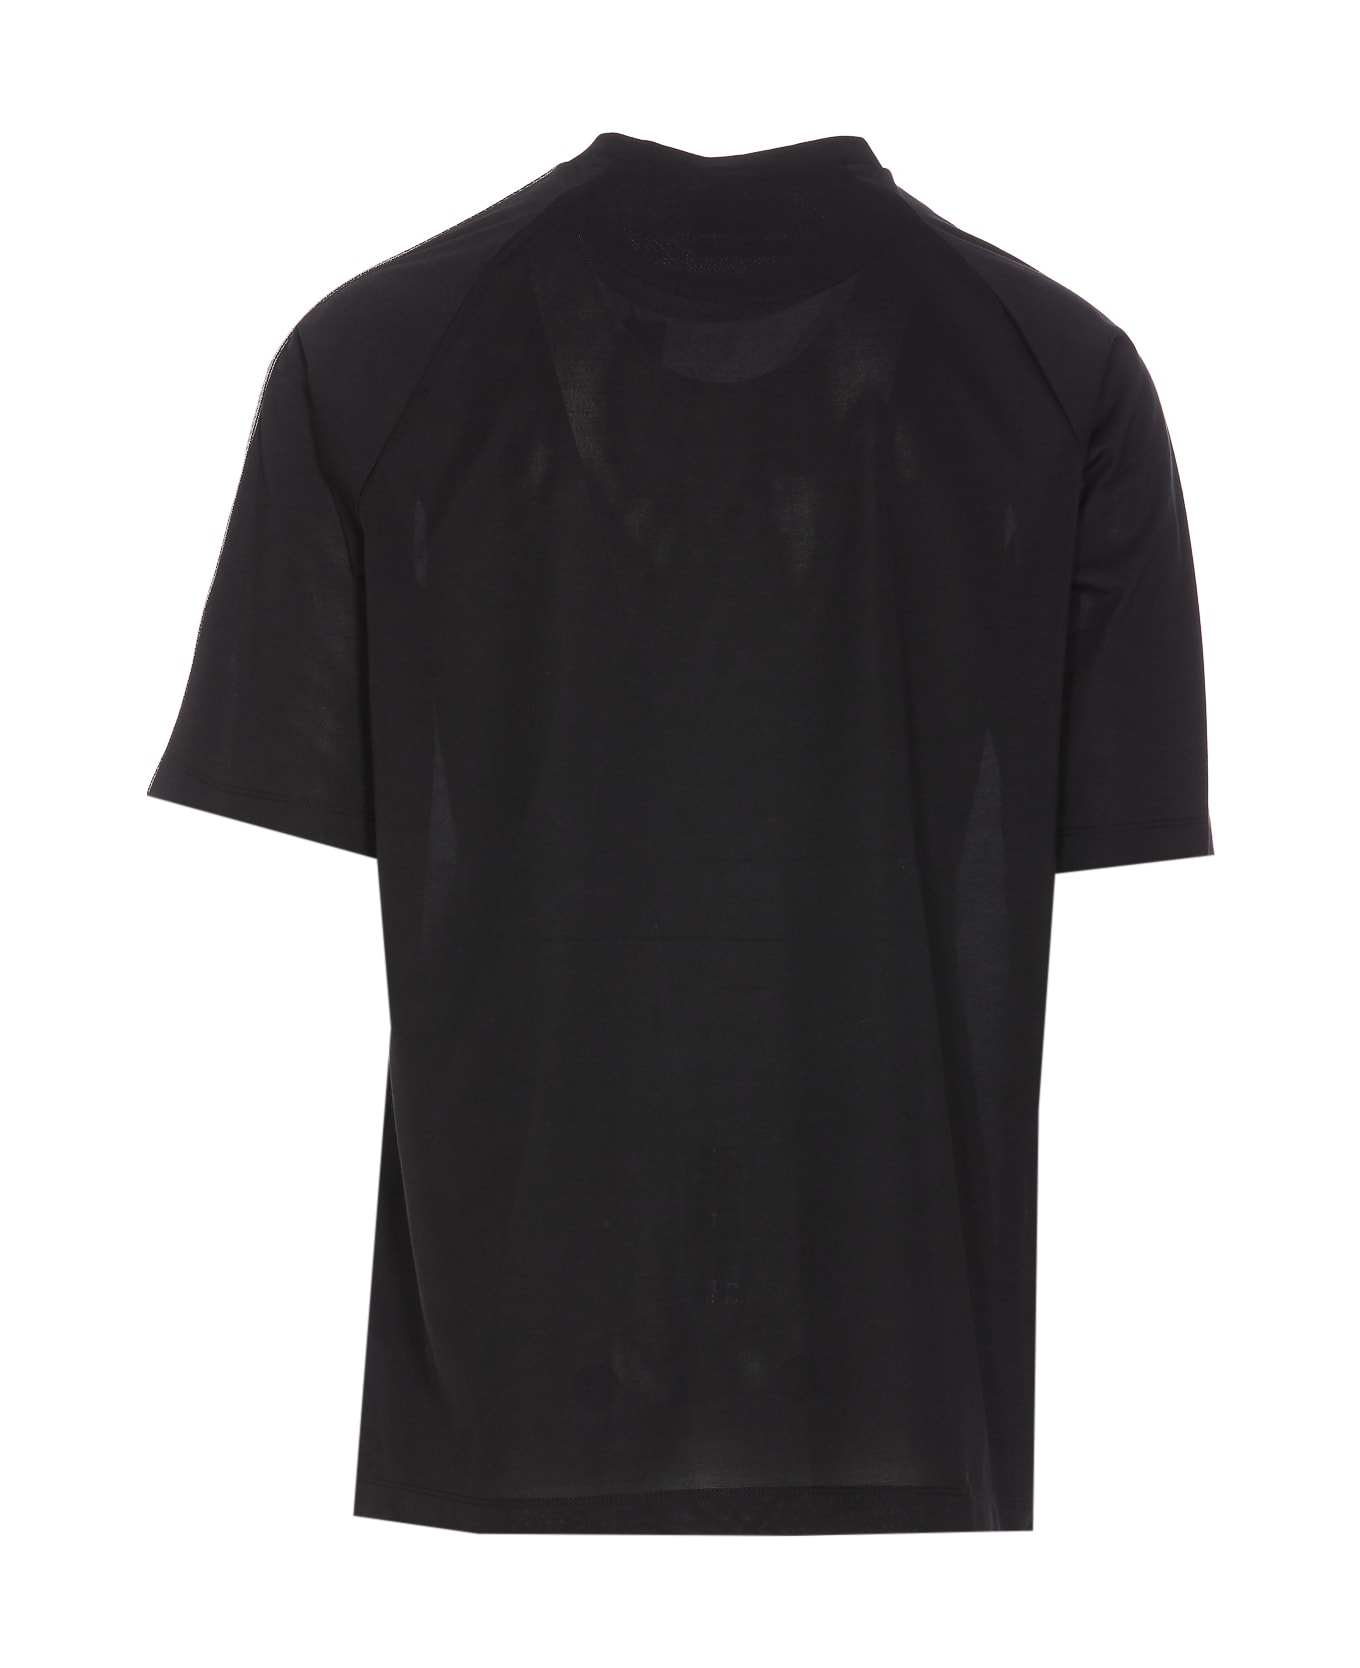 Y-3 3s T-shirt - Black